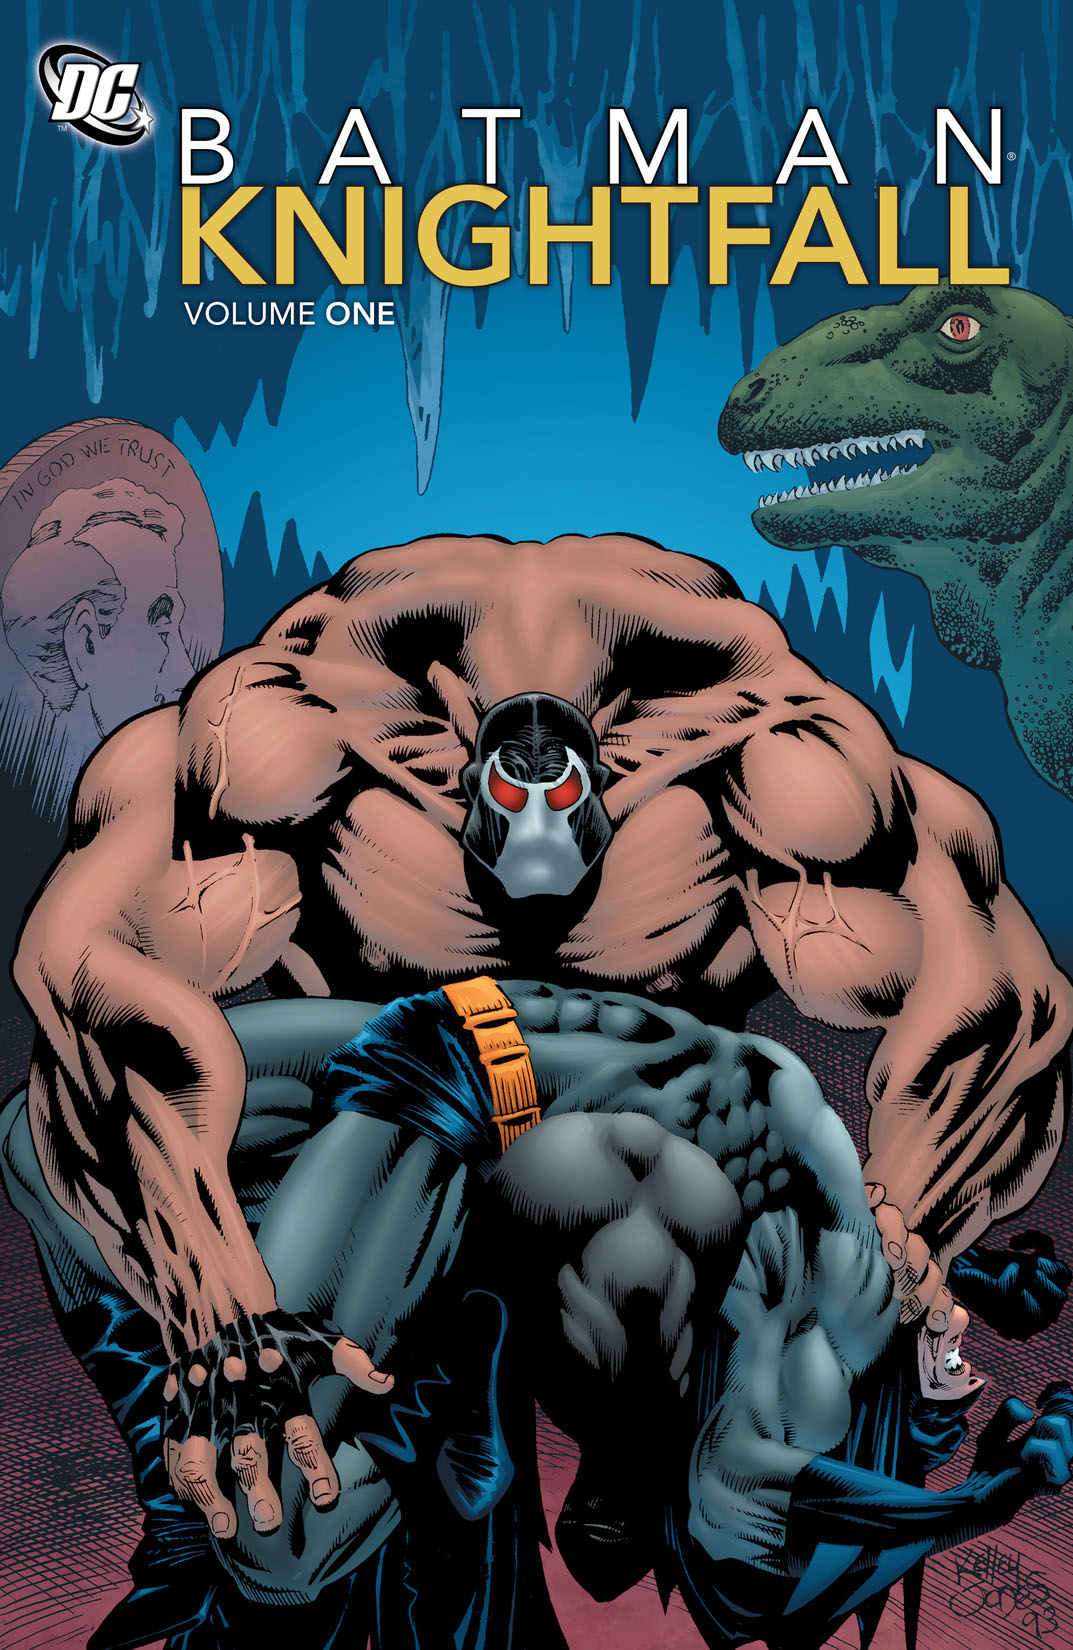 Batman: Knightfall Vol. 1 preview images